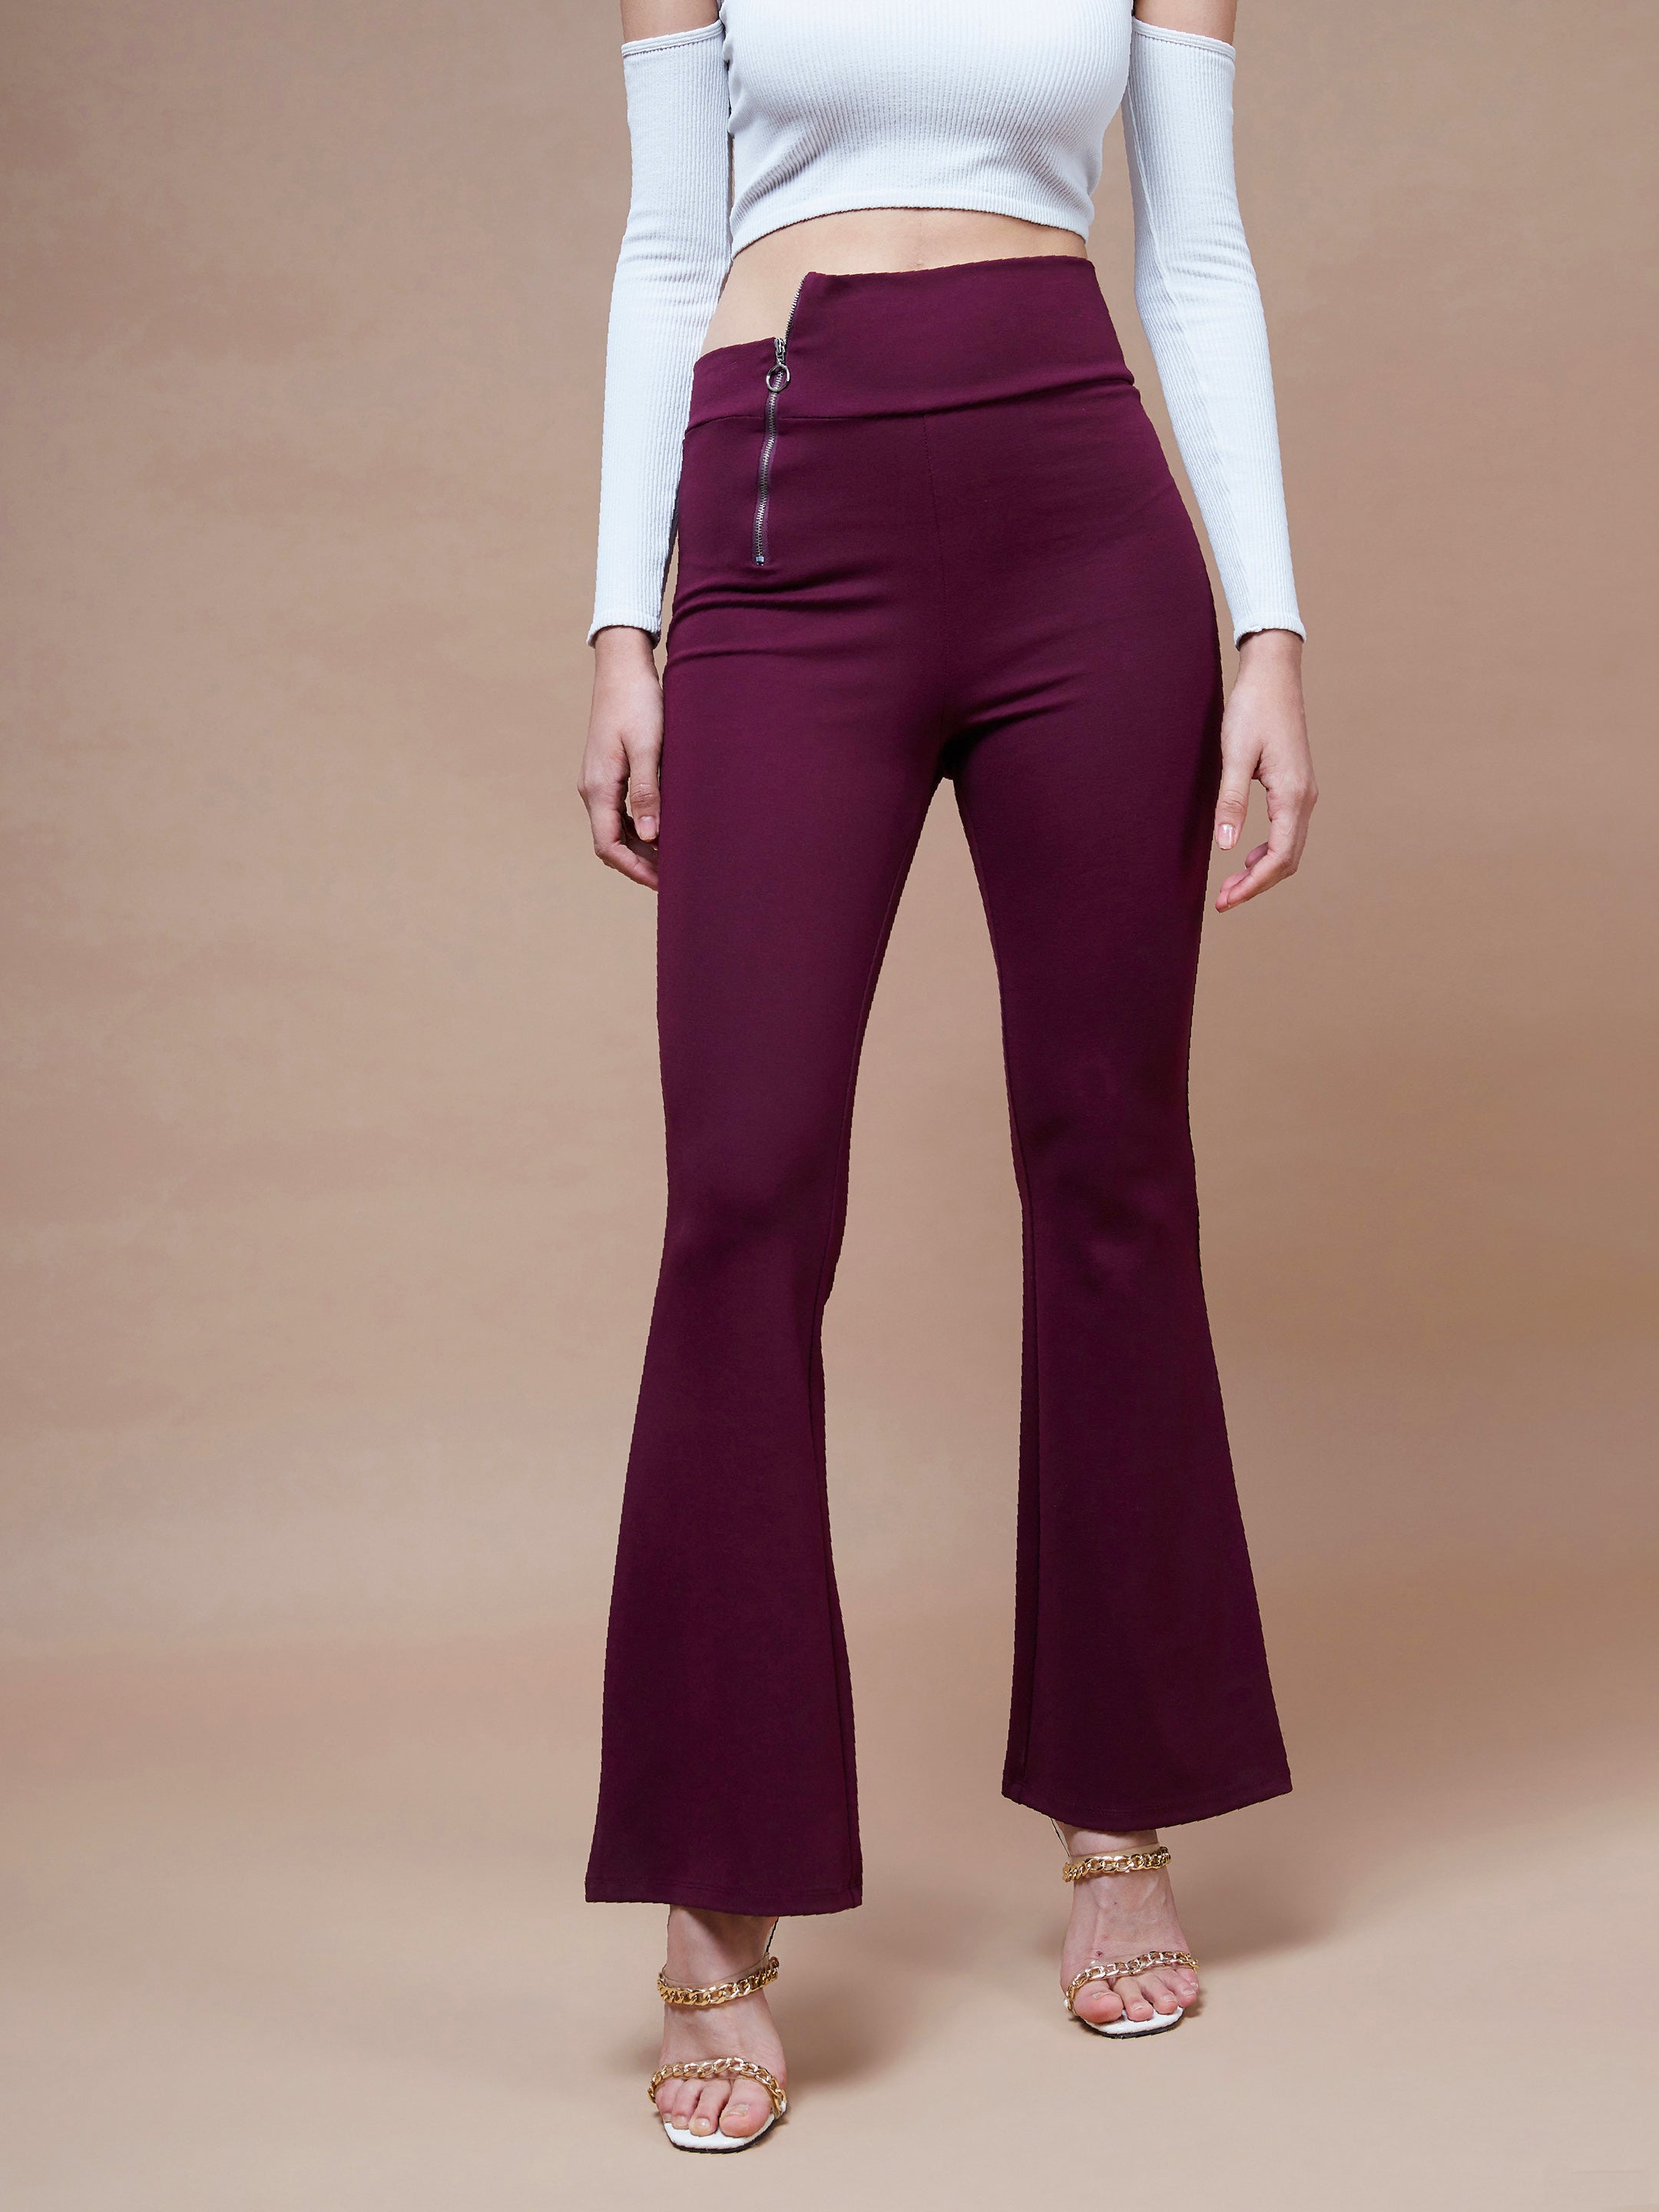 Women's Burgundy Side Zipper Bell Bottom Pants - SASSAFRAS